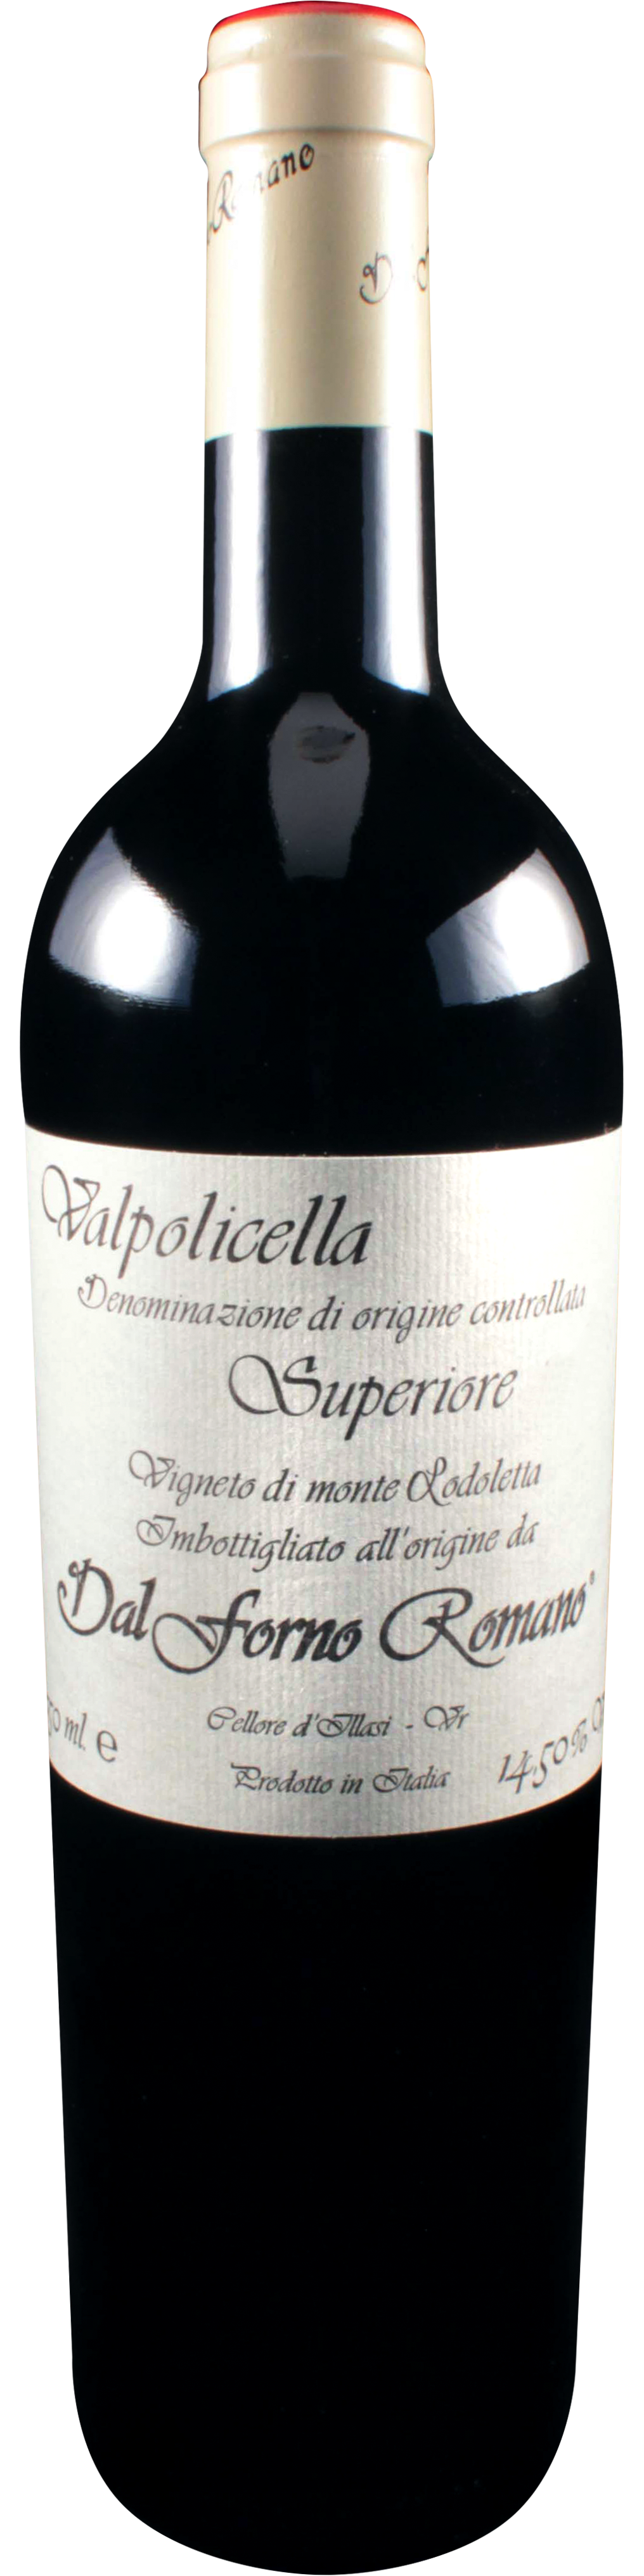 Bottle shot of 1996 Valpolicella Superiore